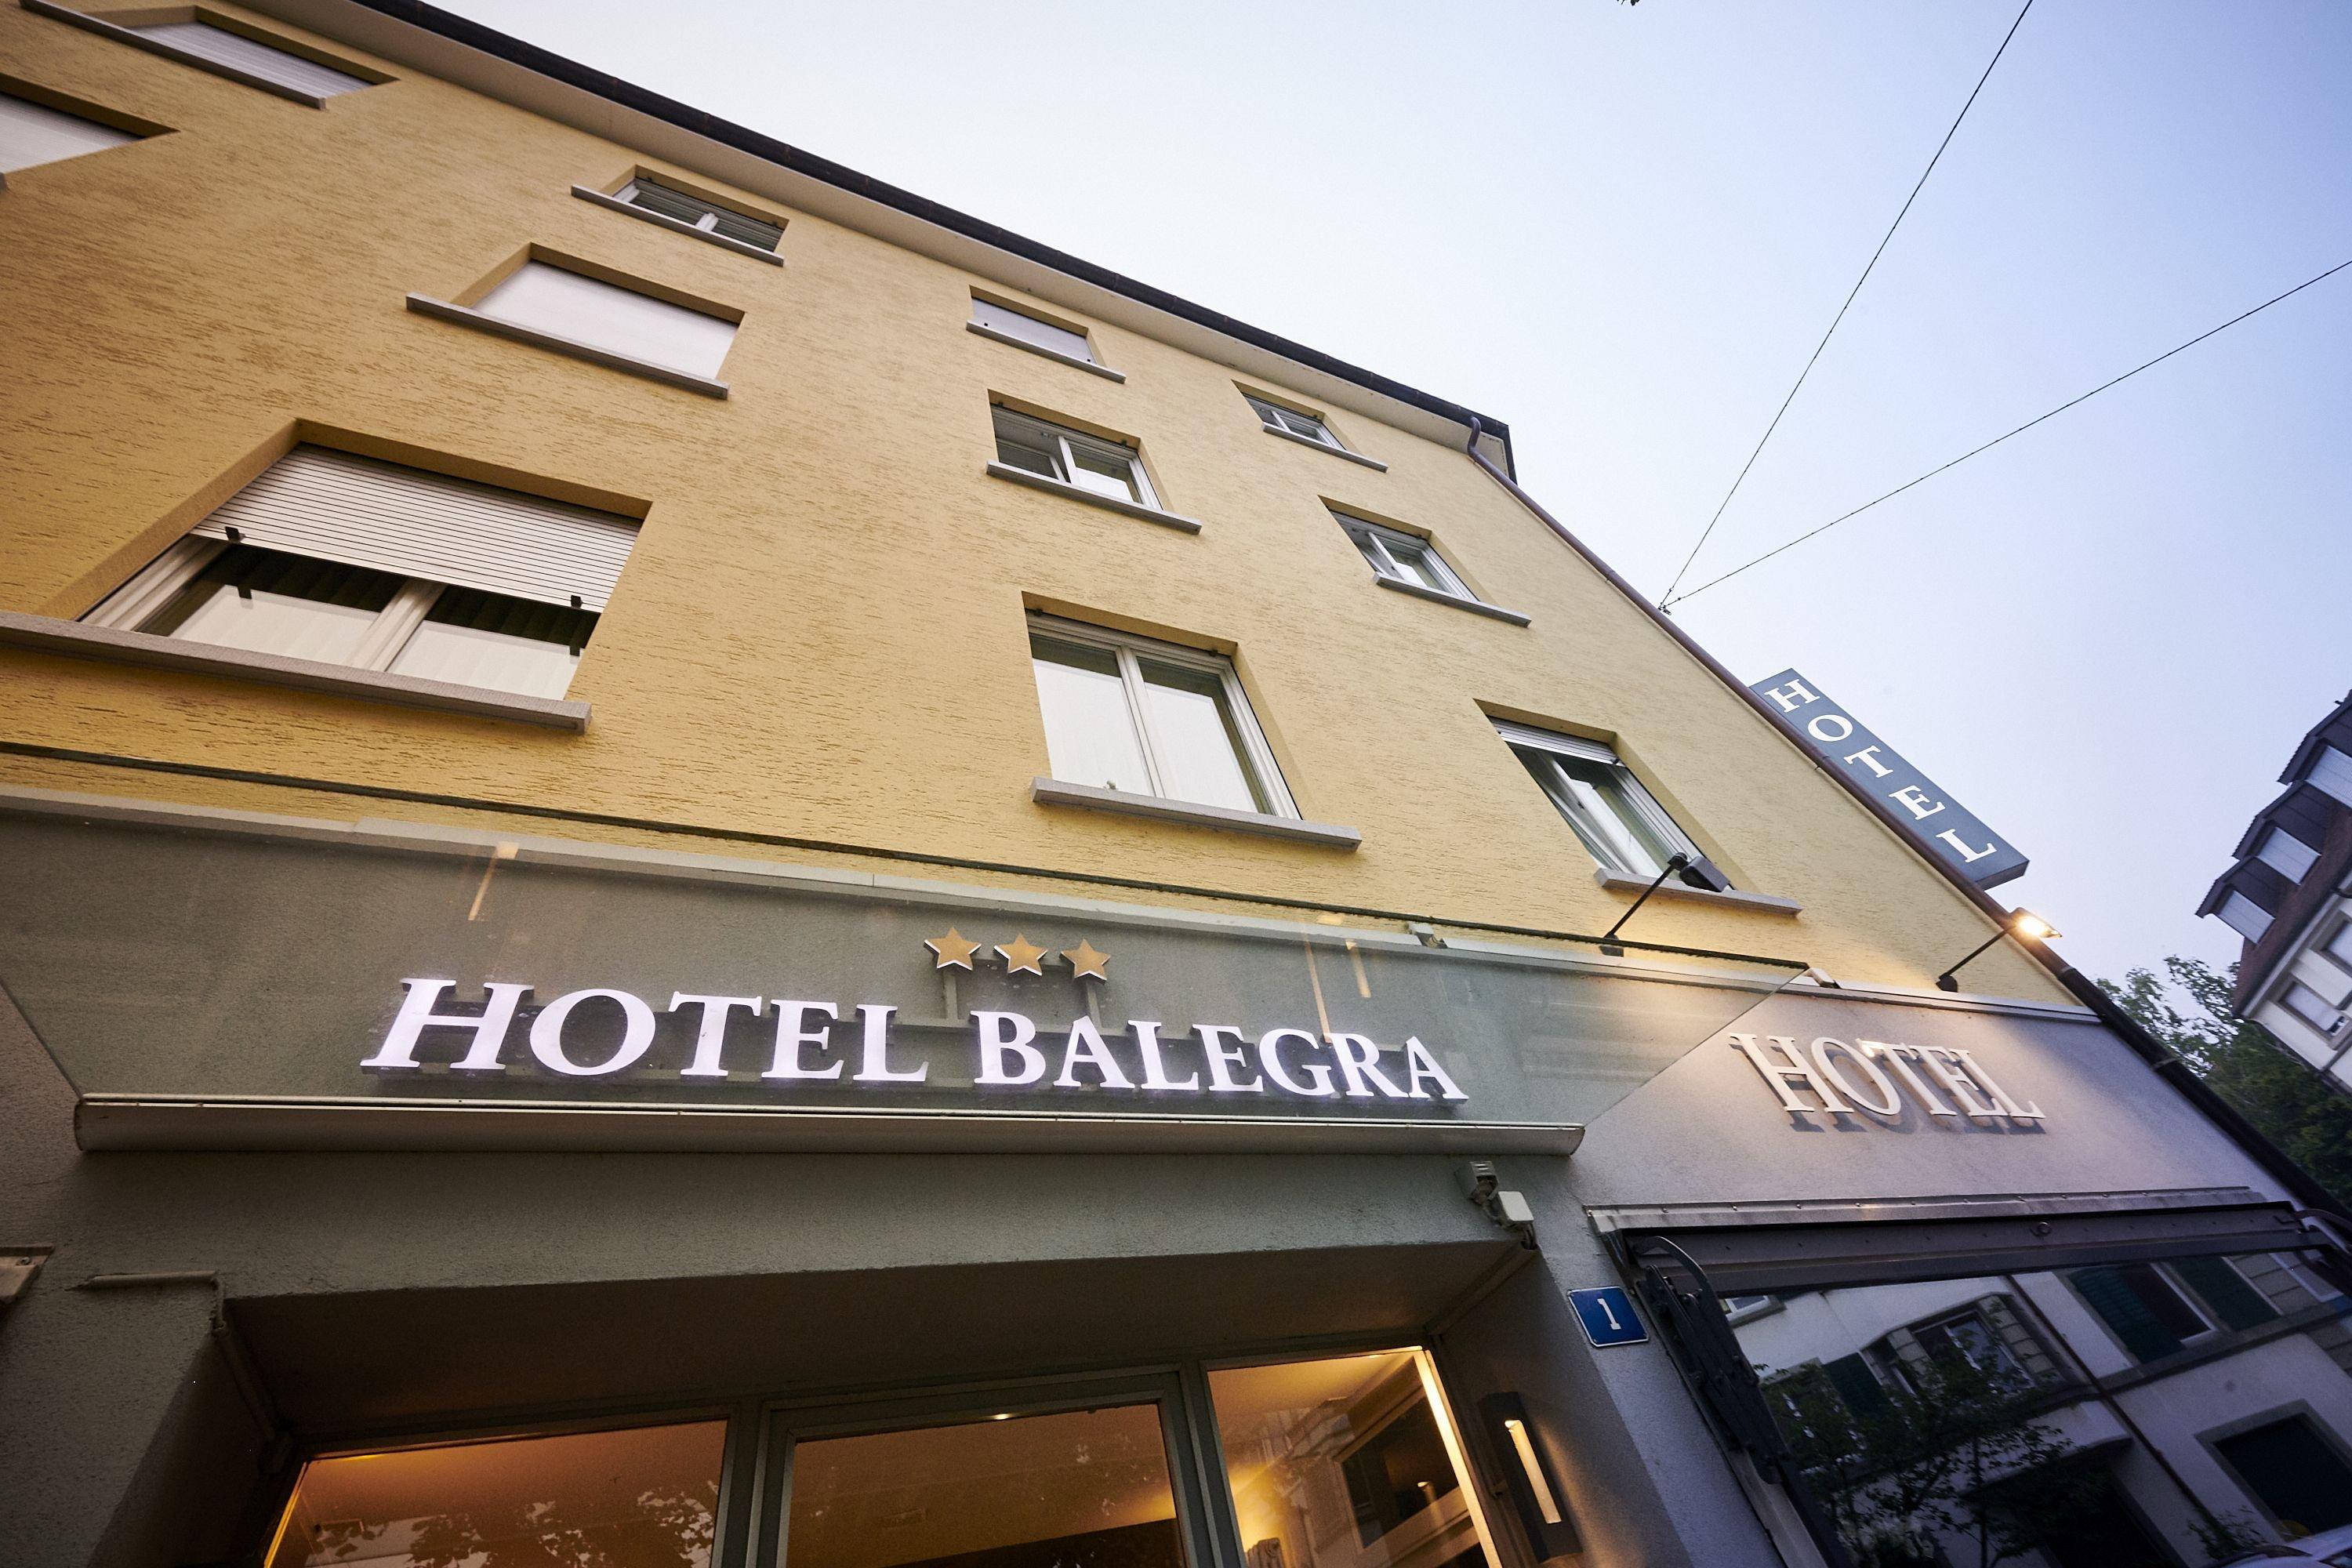 Hotel Balegra in Basel, Switzerland